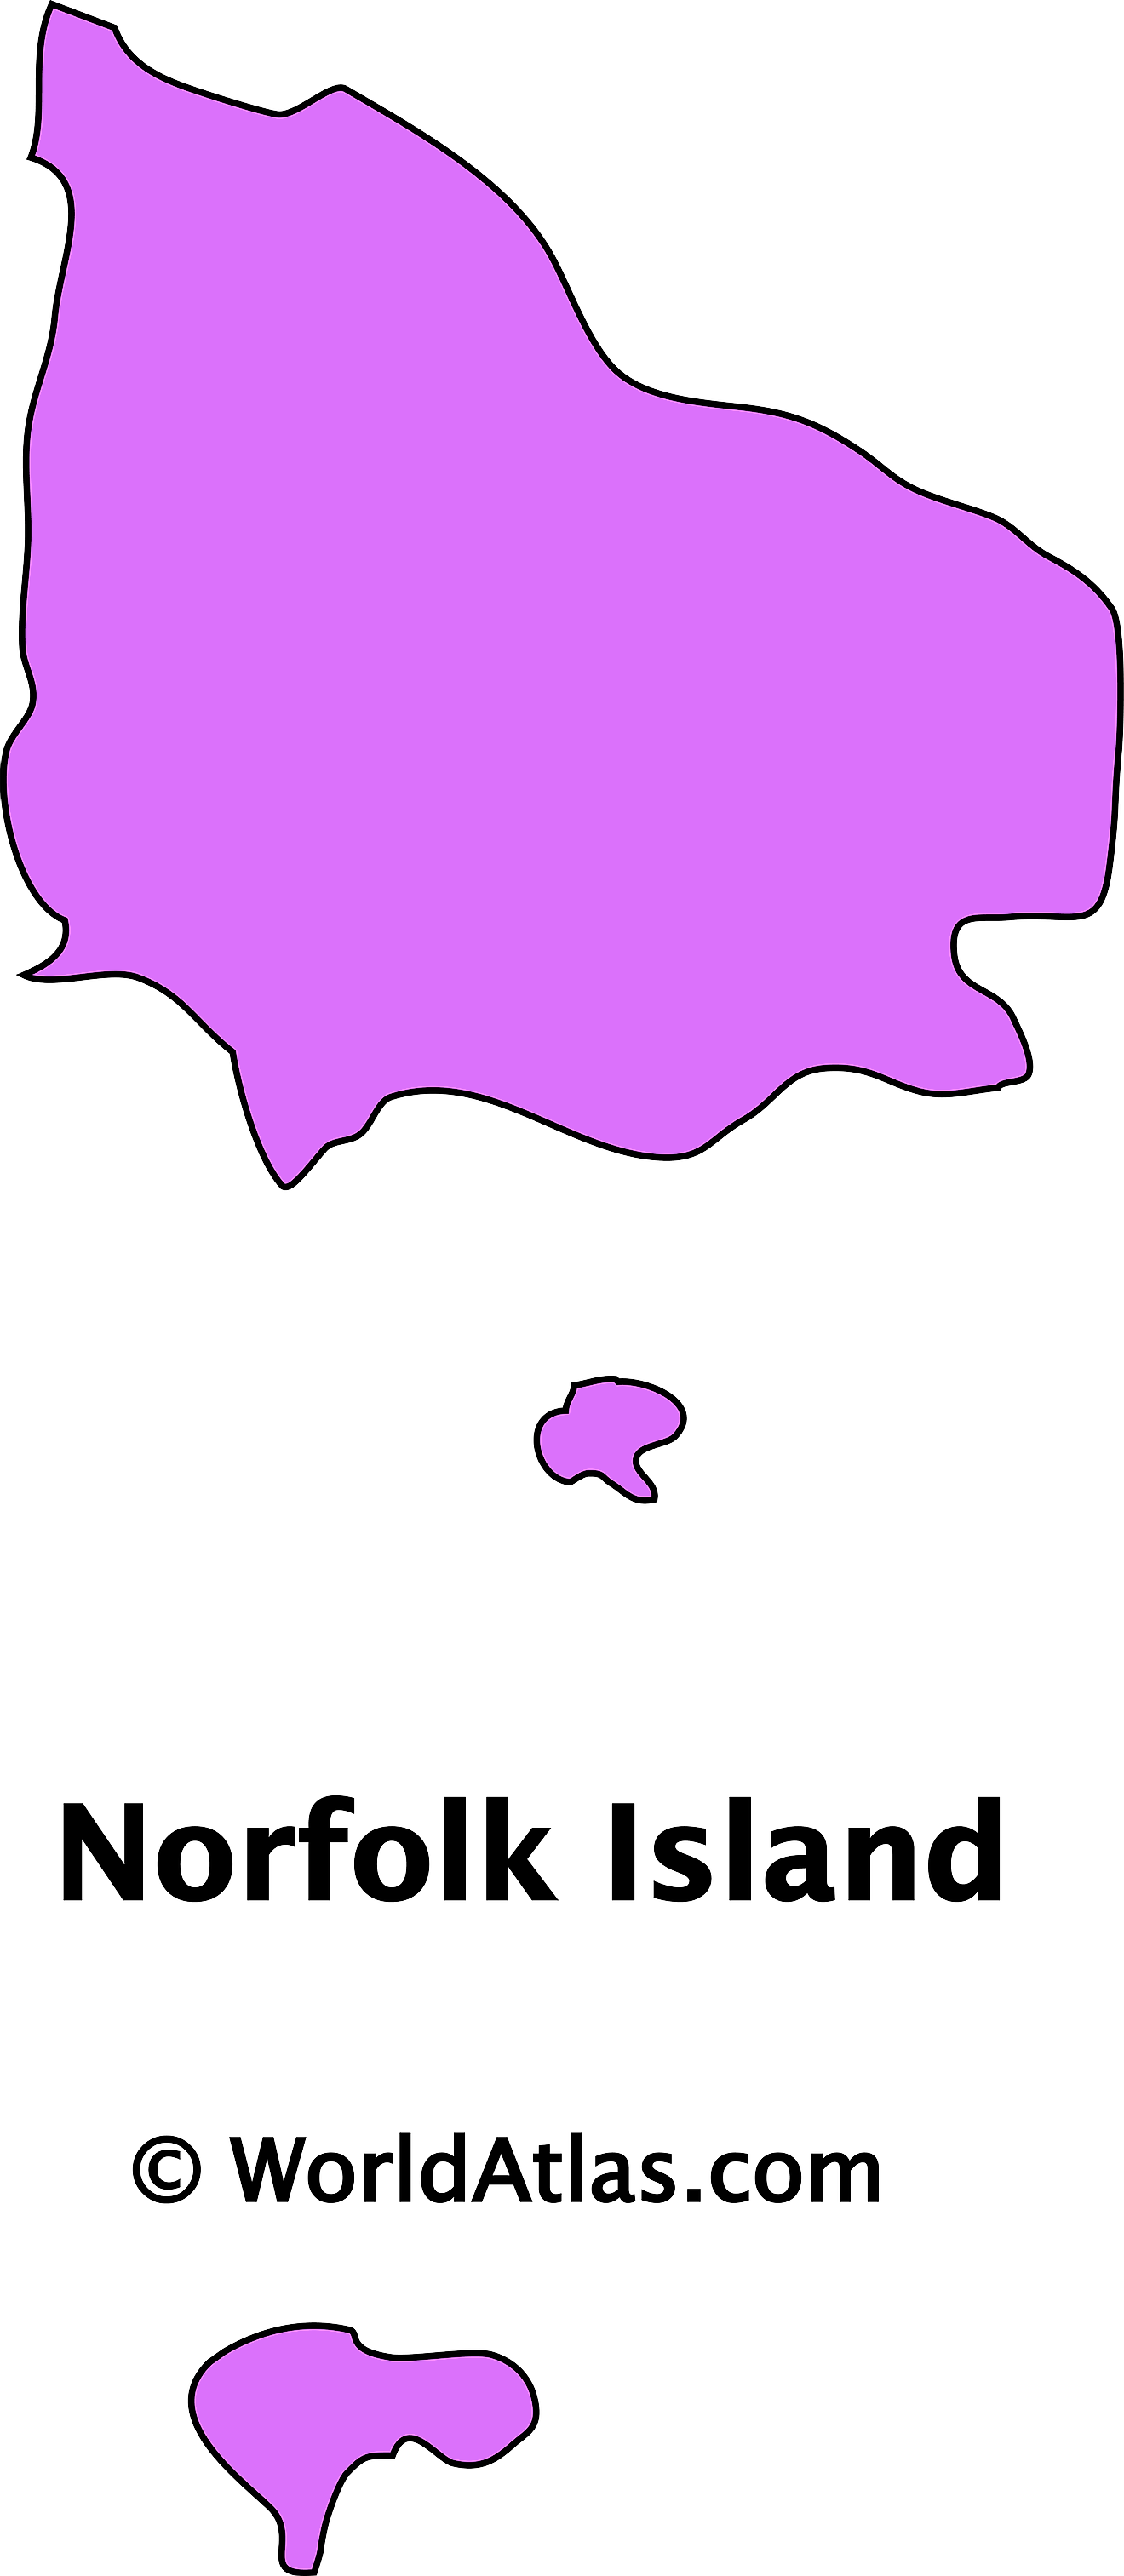 Outline Map of Norfolk Island